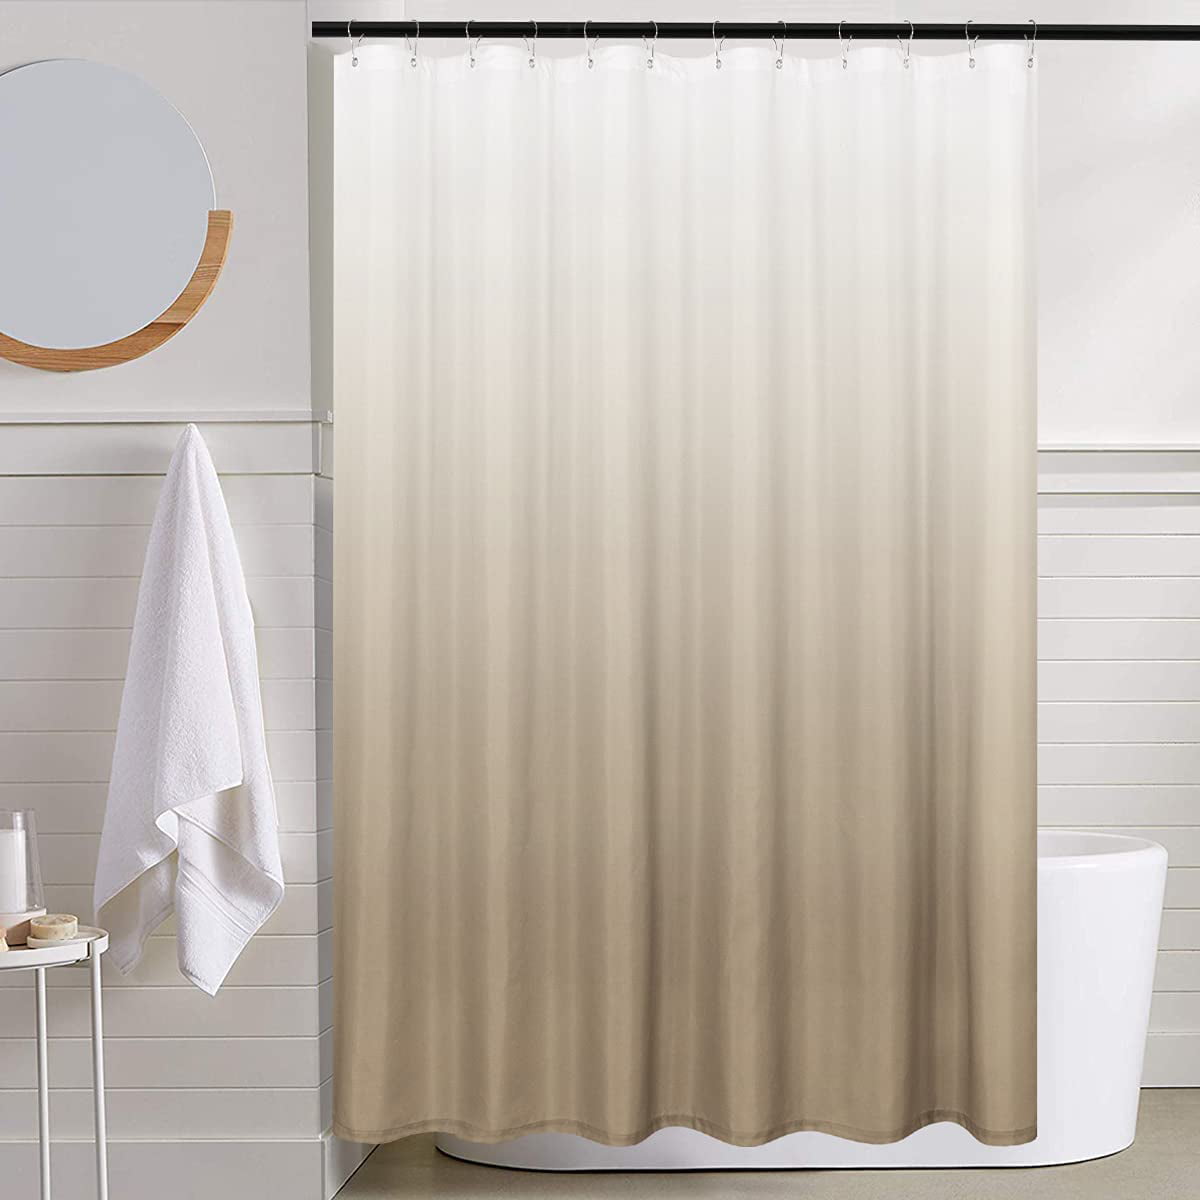 Waffle Weave Fabric Shower Curtain for Bathroom Waterproof 70 x 72 inch,1 Panel 